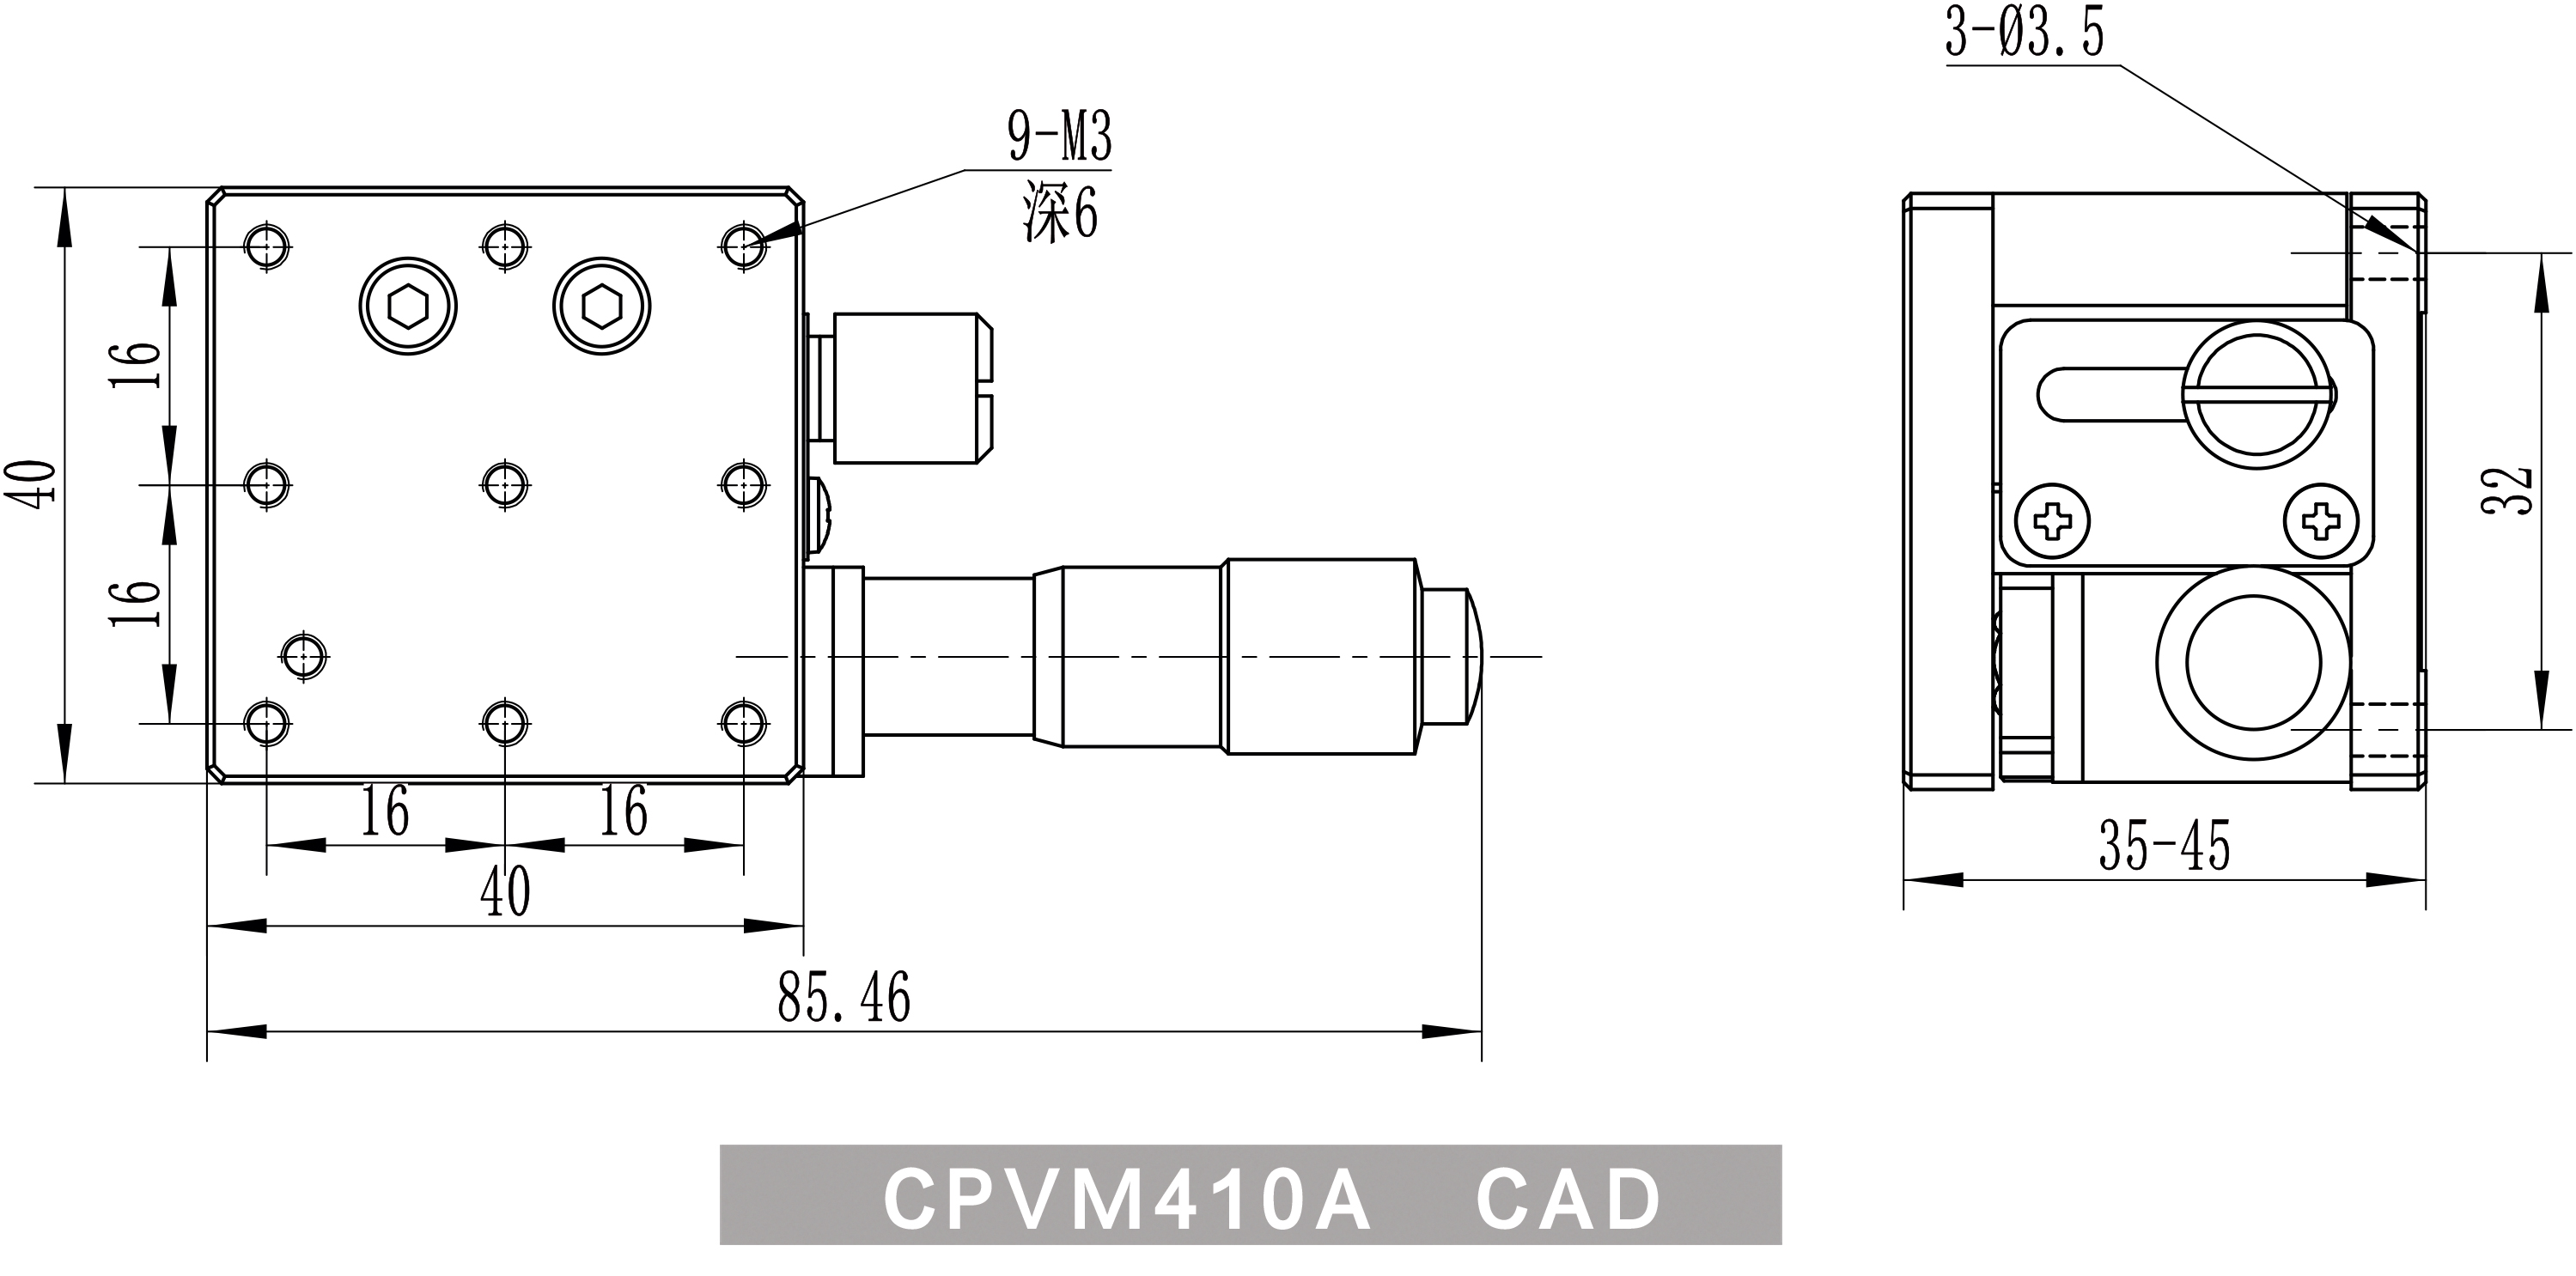 CPVM410A-CAD.jpg